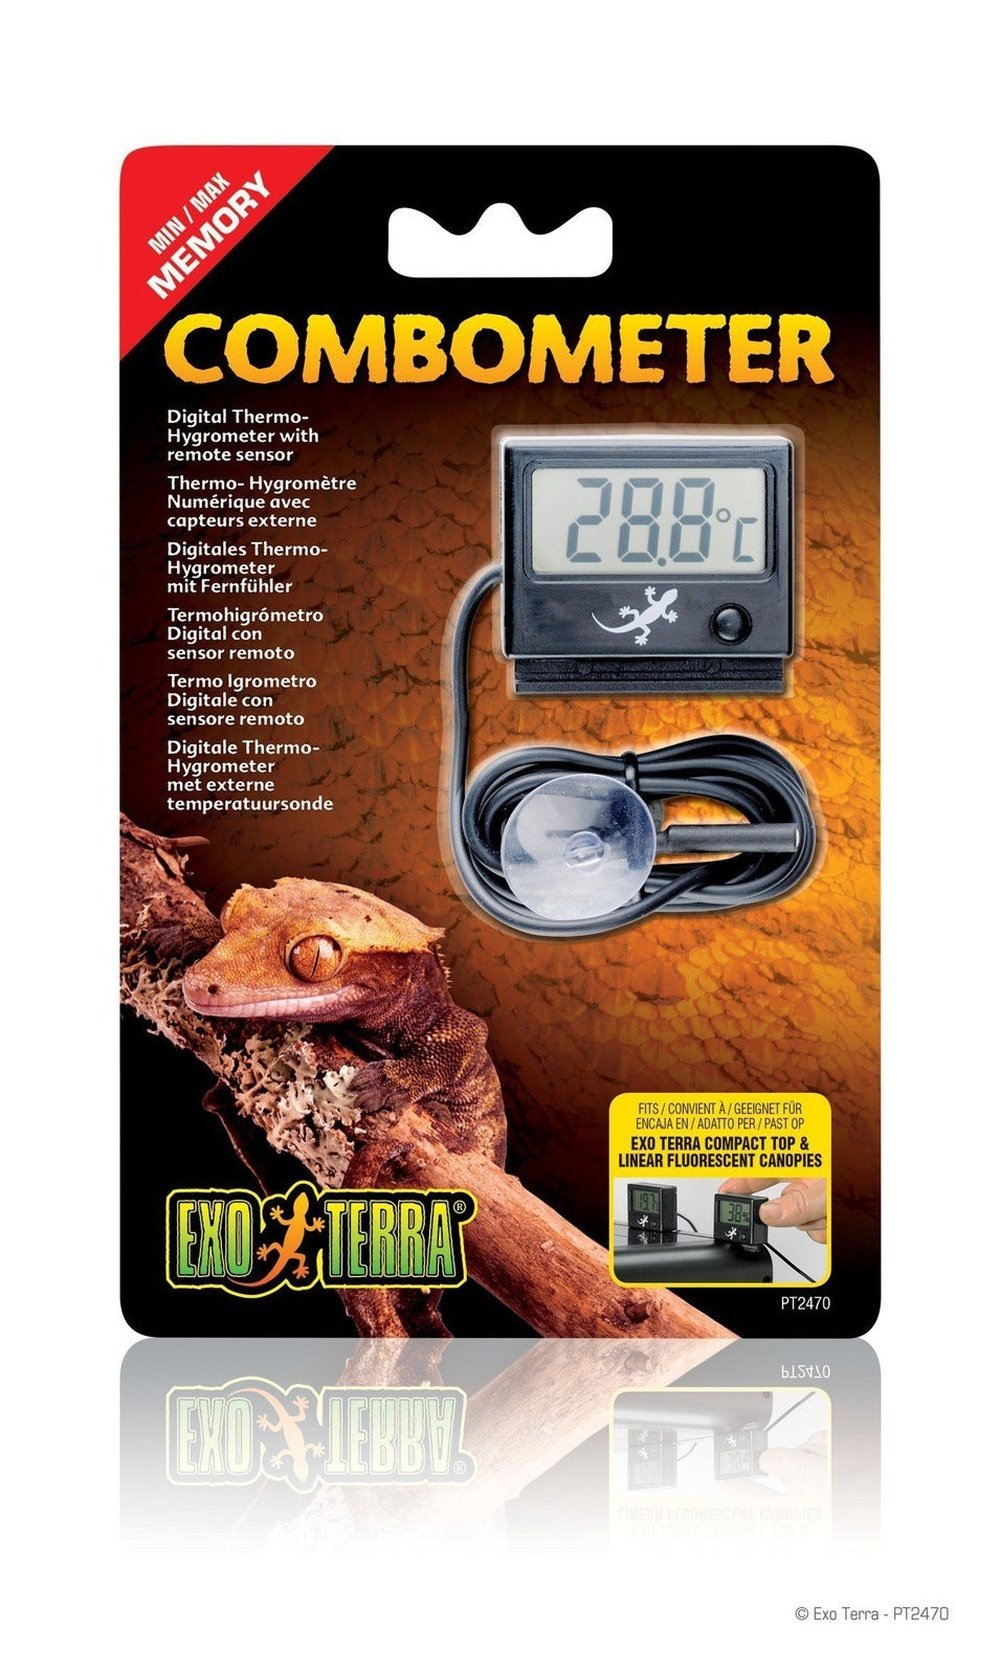 Exo Terra Digital Combometer - Dubia.com